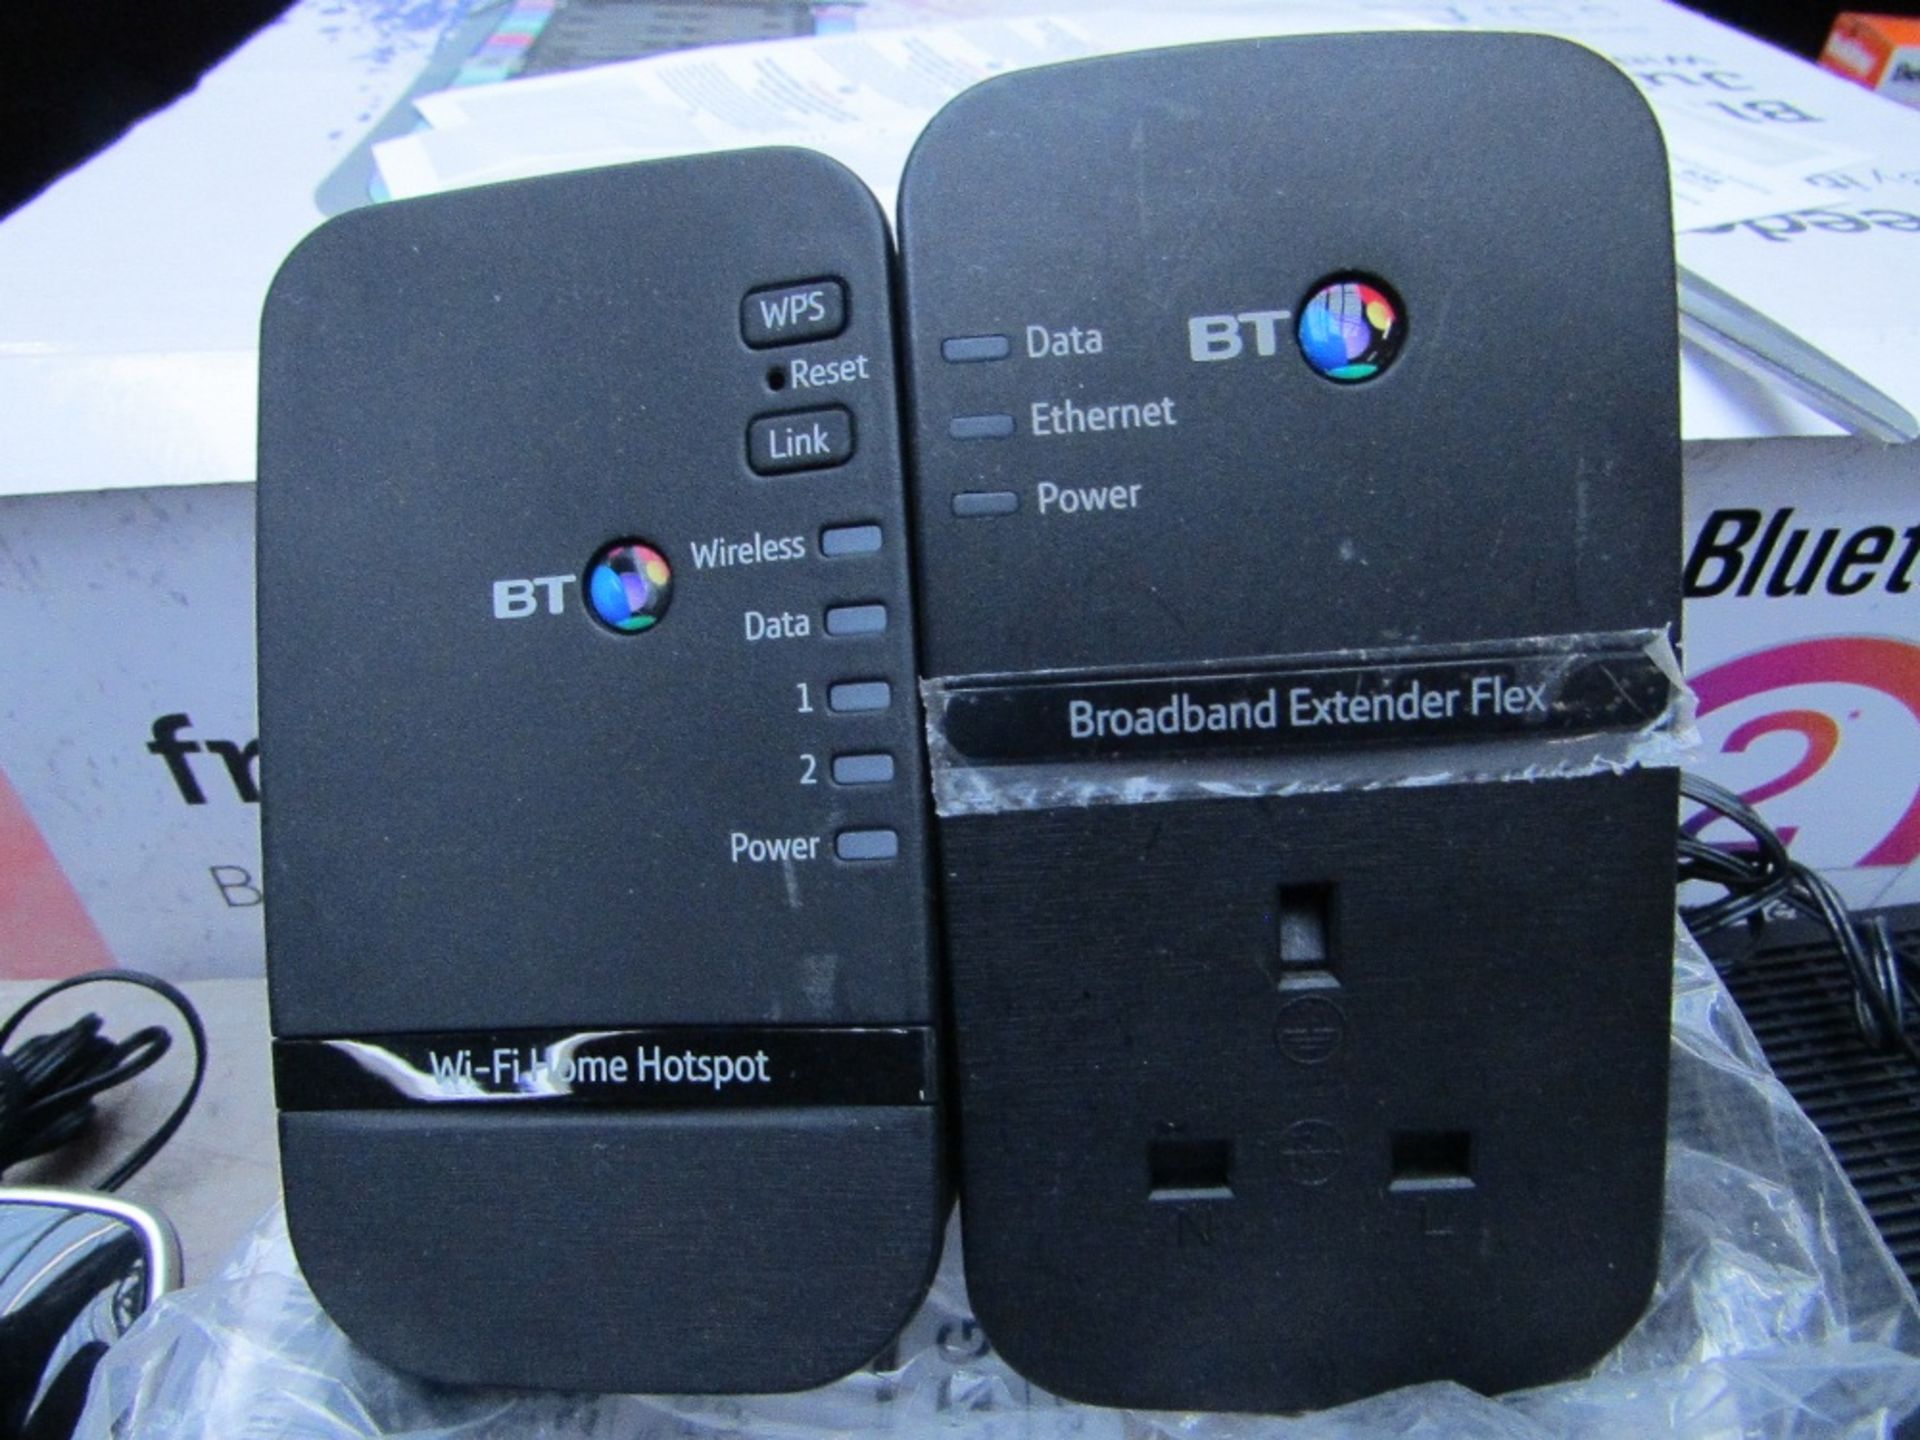 2x Items being: - BT wi-fi hotspots - Broadband extender flex Both unchecked.